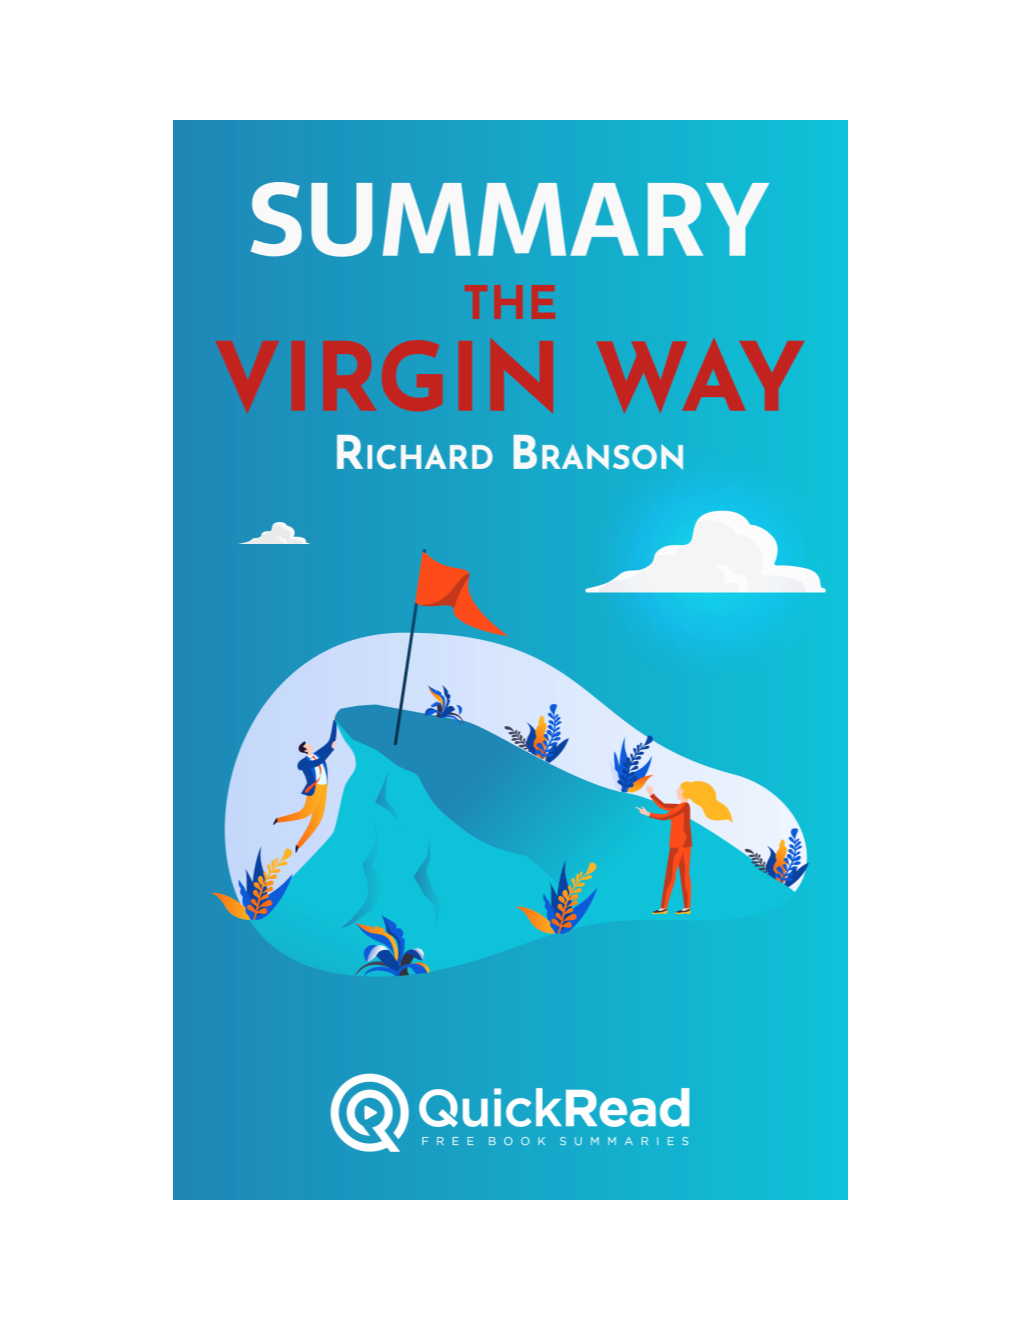 “The Virgin Way” by Richard Branson